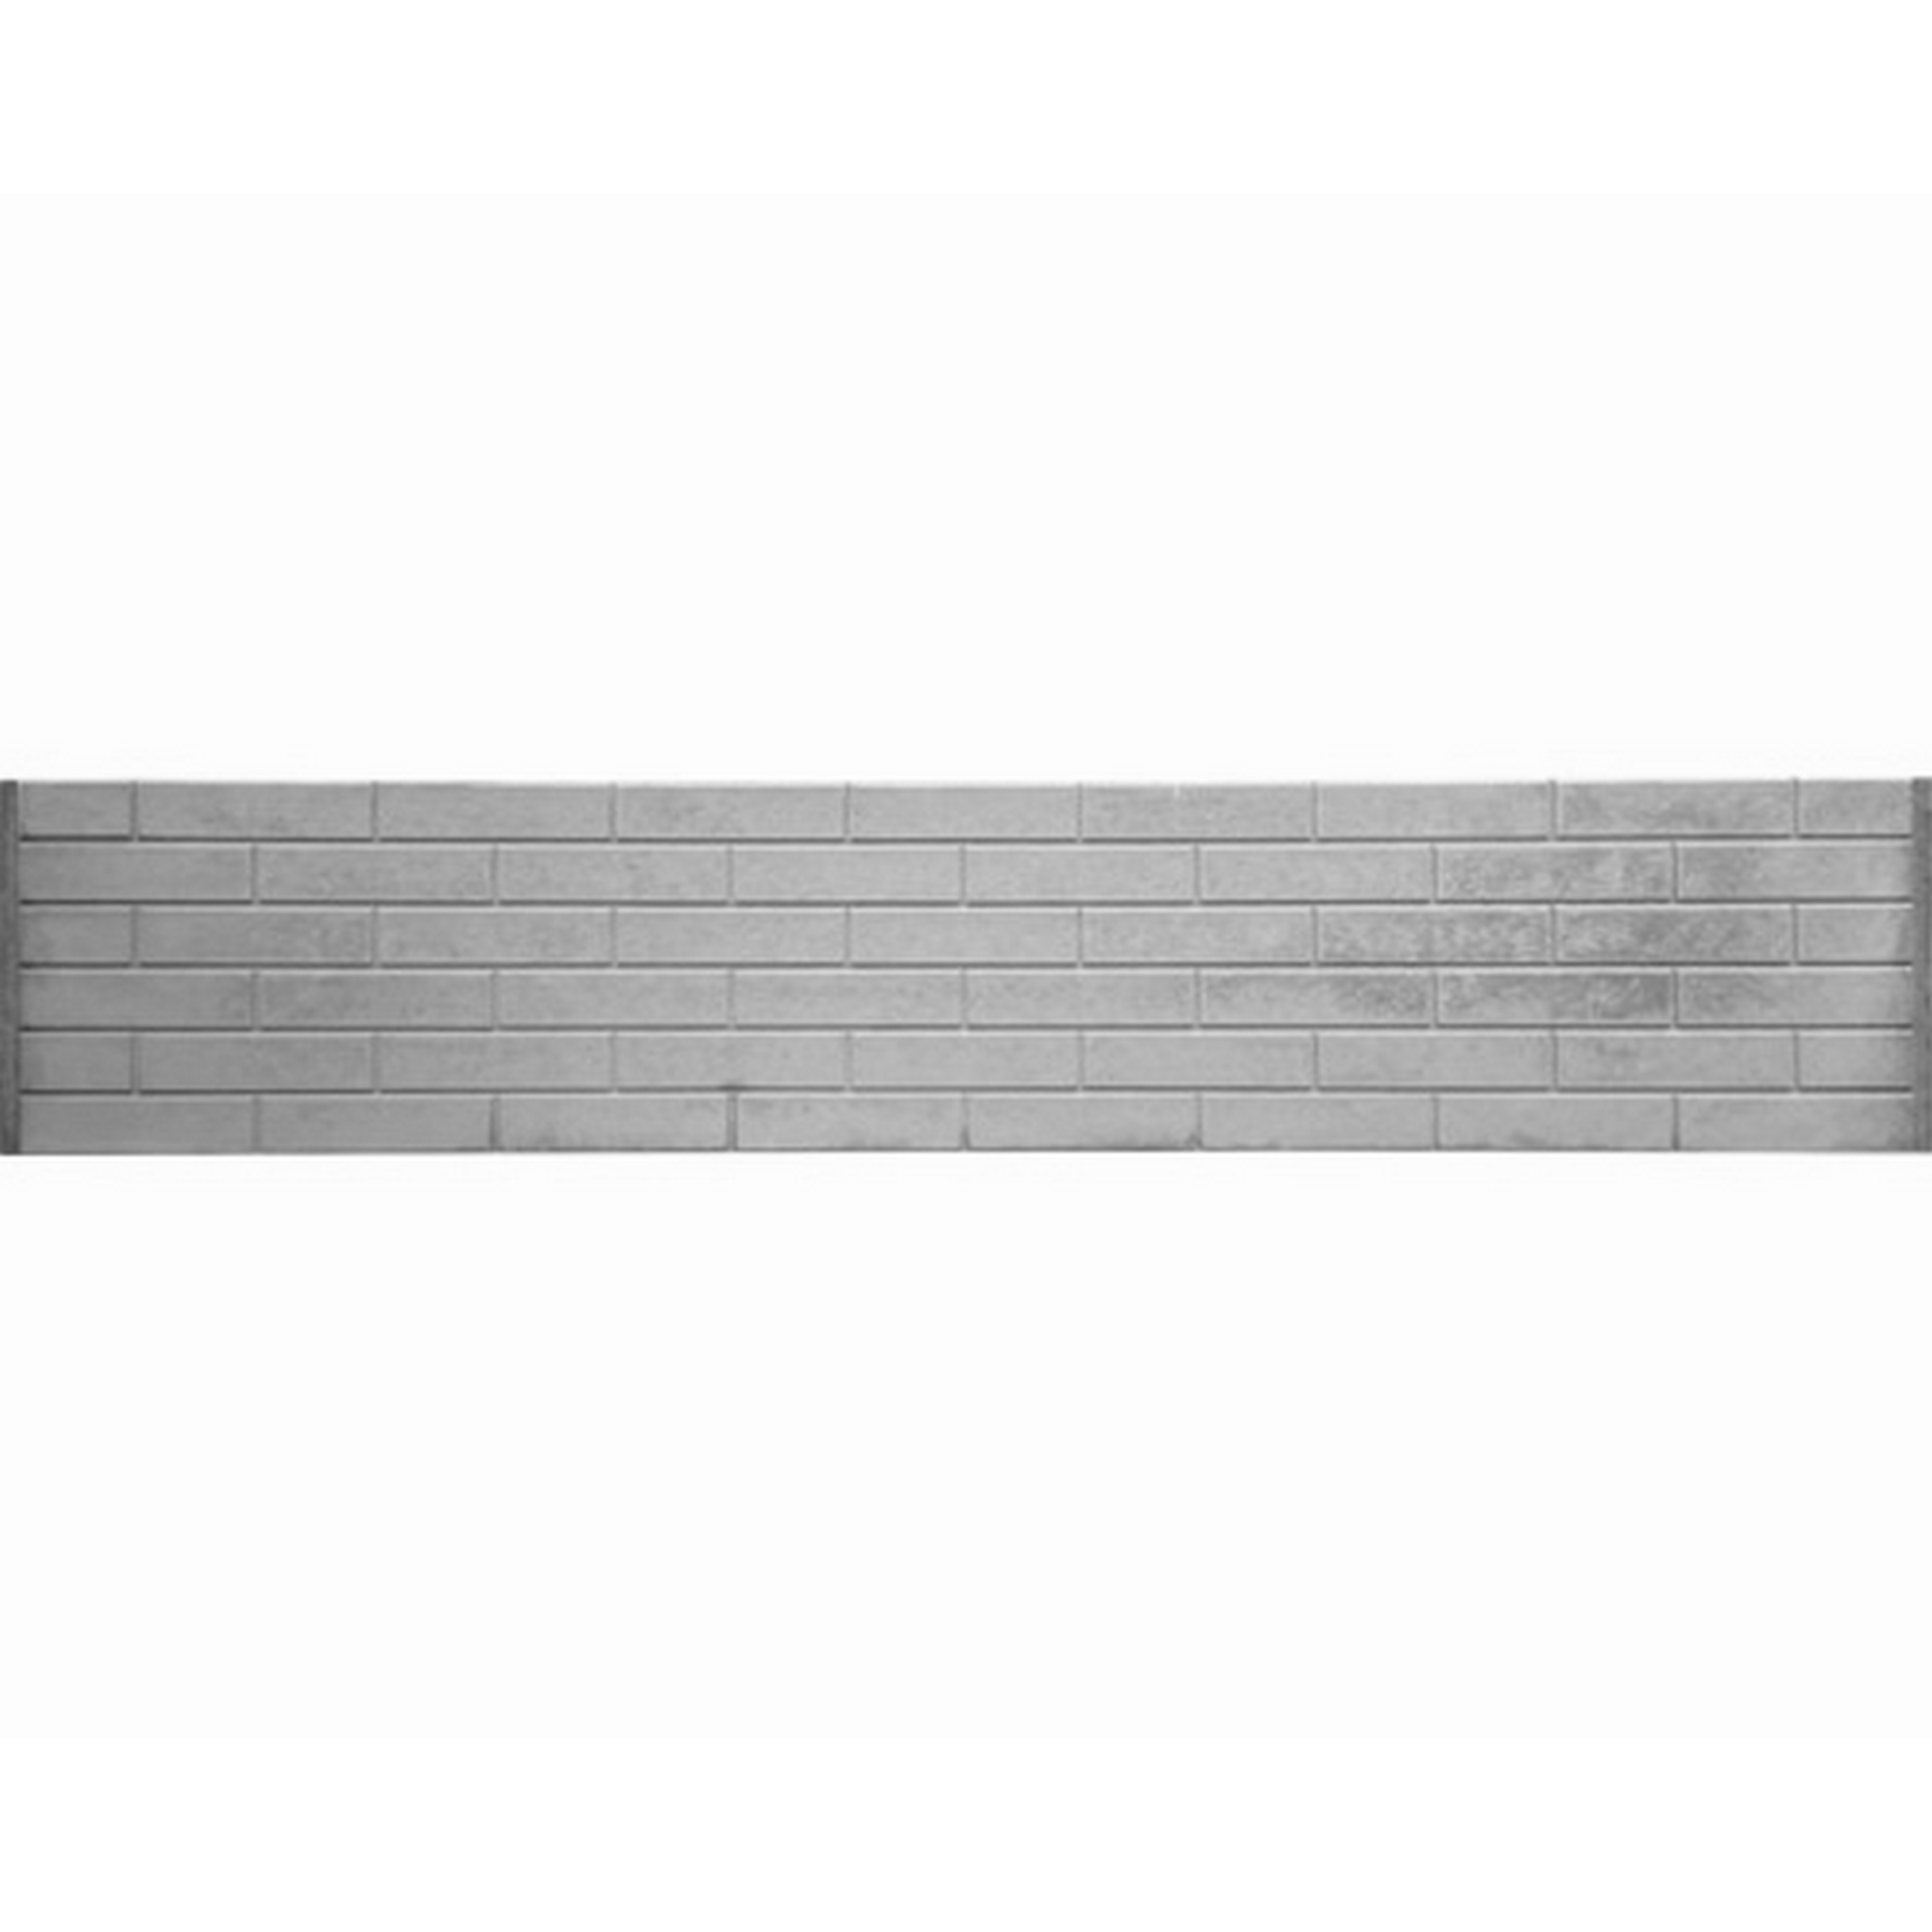 Betonzaunplatte 'Standard Stein Glatt' 200 x 38,5 x 3,5 cm grau + product picture